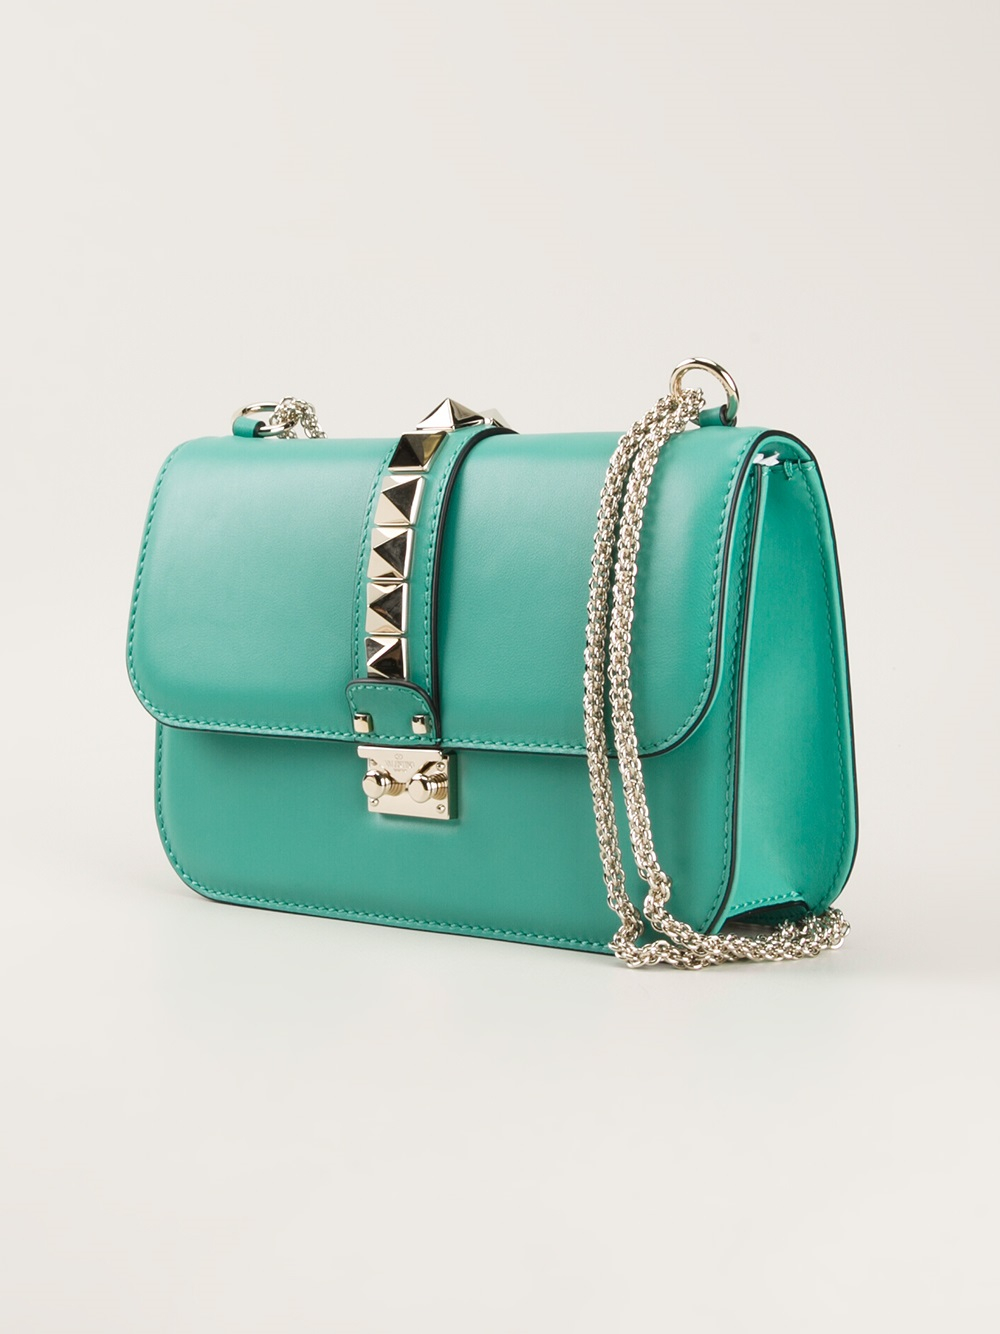 Lyst - Valentino Glam Lock Cshoulder Bag in Green